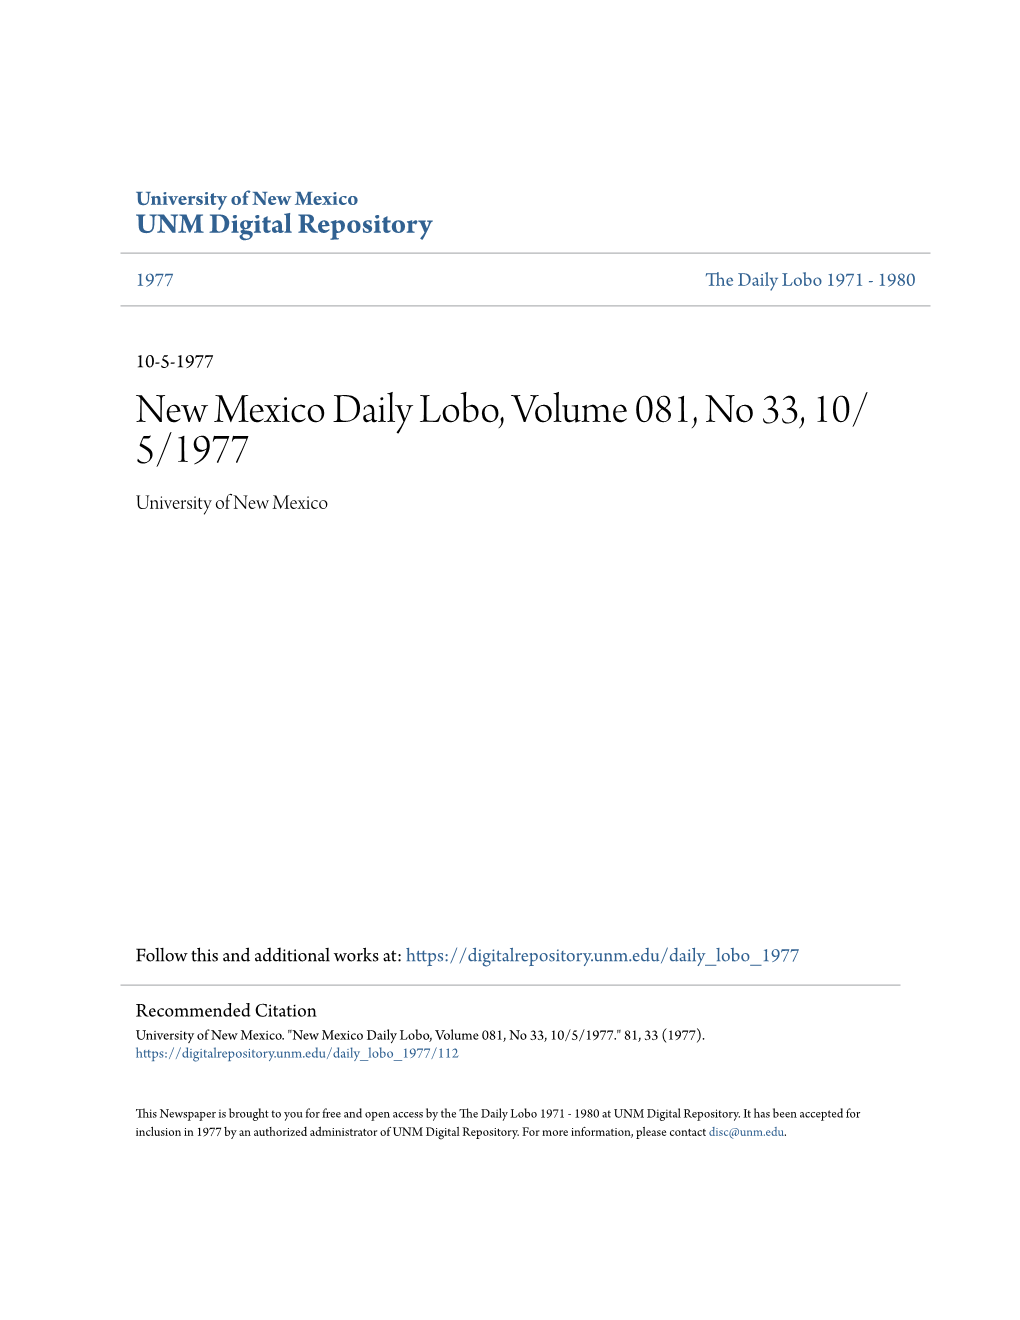 New Mexico Daily Lobo, Volume 081, No 33, 10/5/1977." 81, 33 (1977)